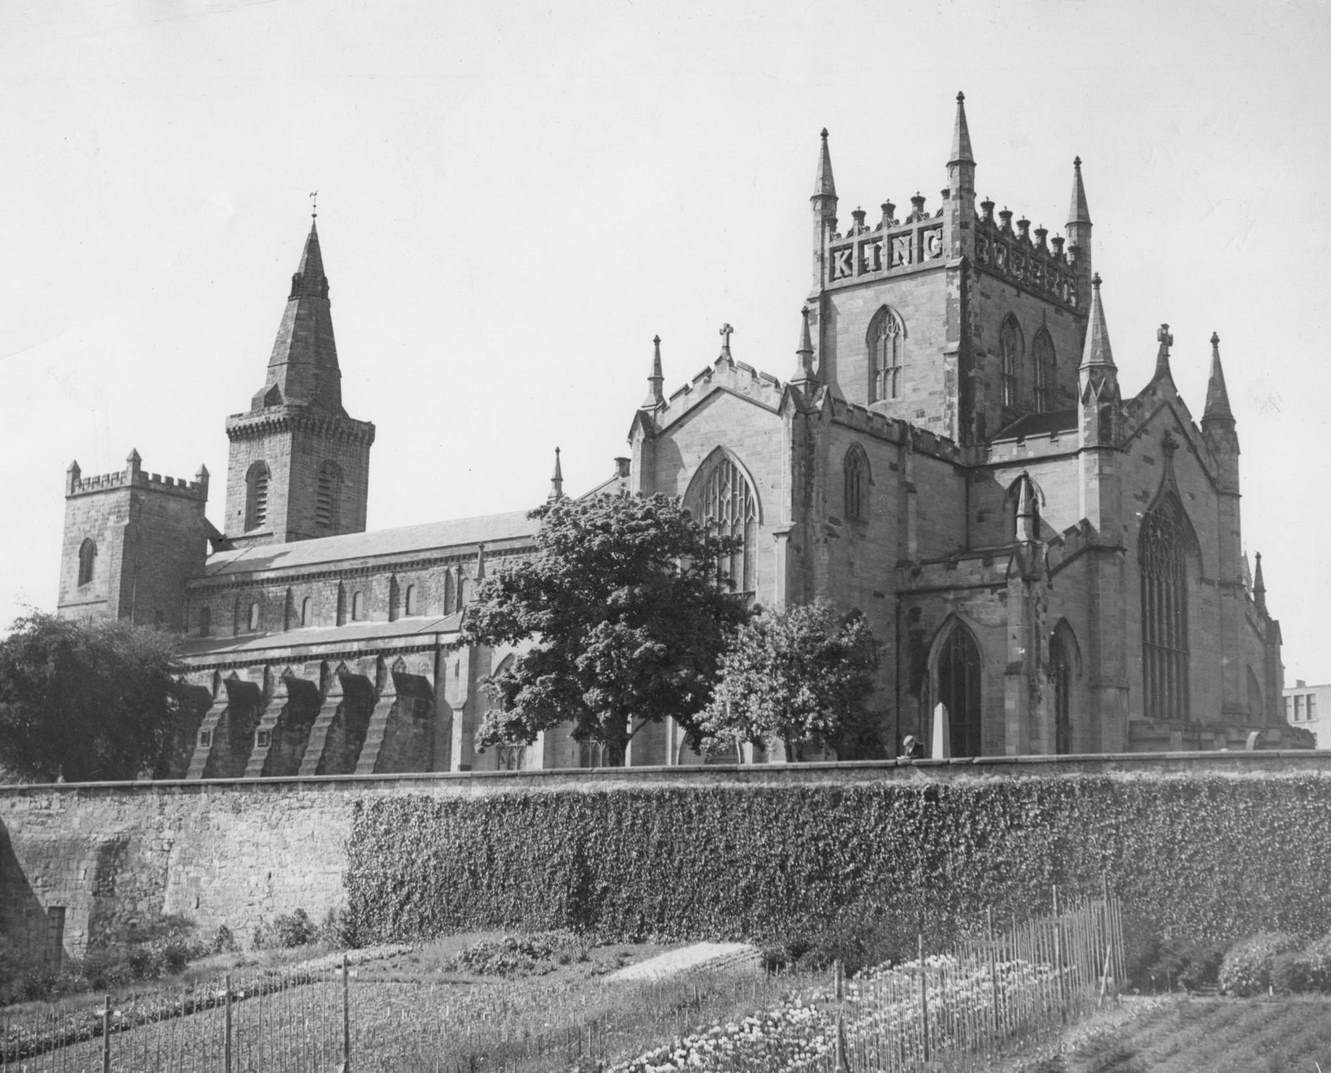 Dunfermline Abbey, Scotland, 1960.